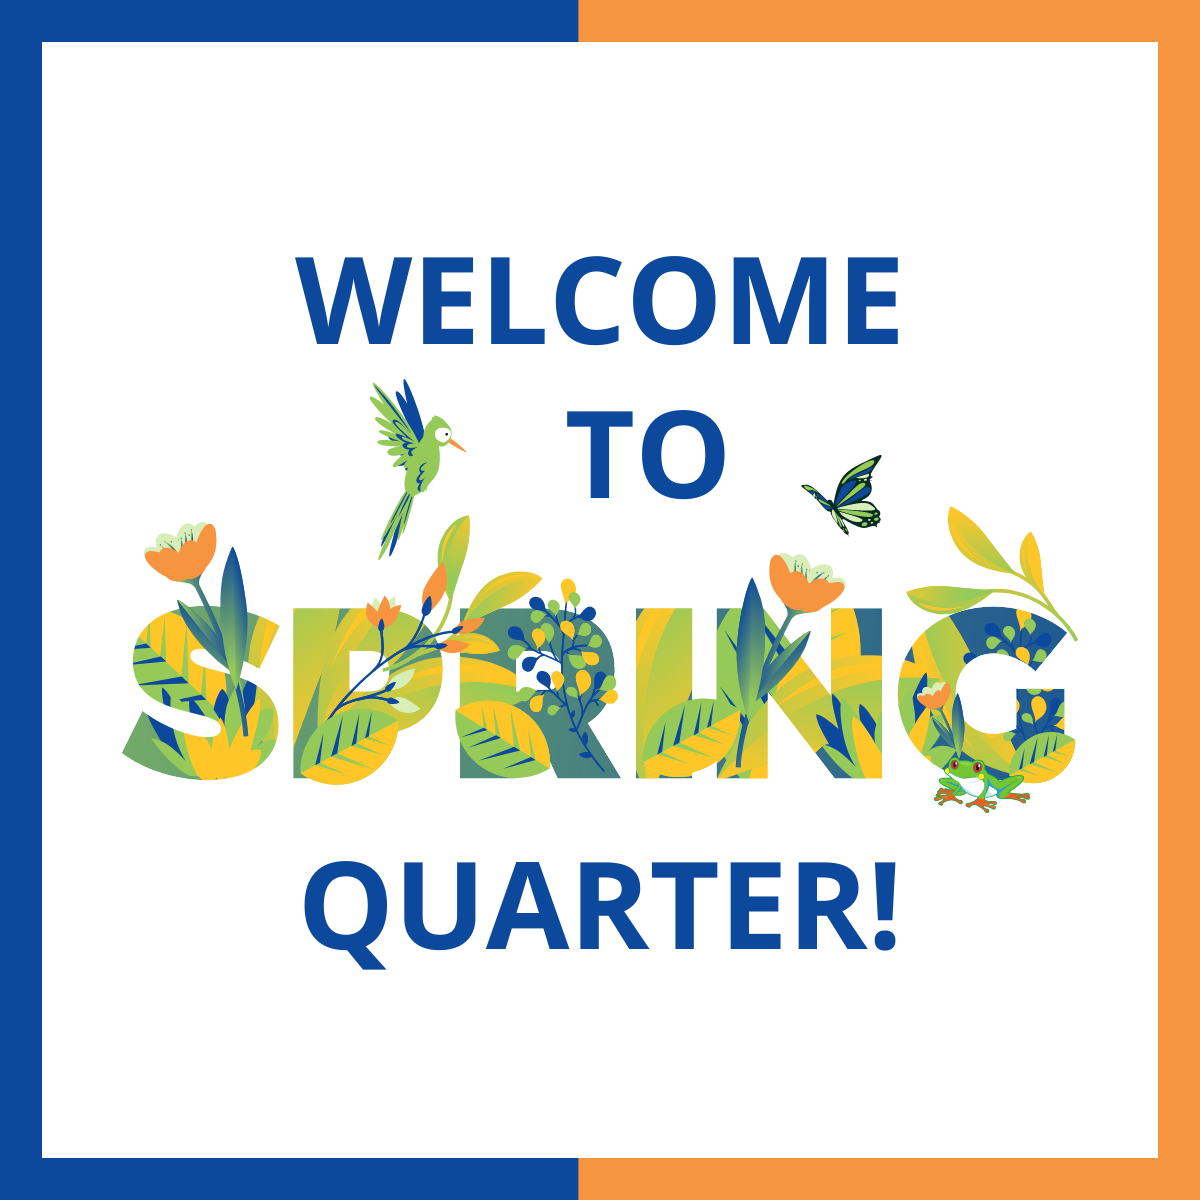 Welcome to Spring Quarter!